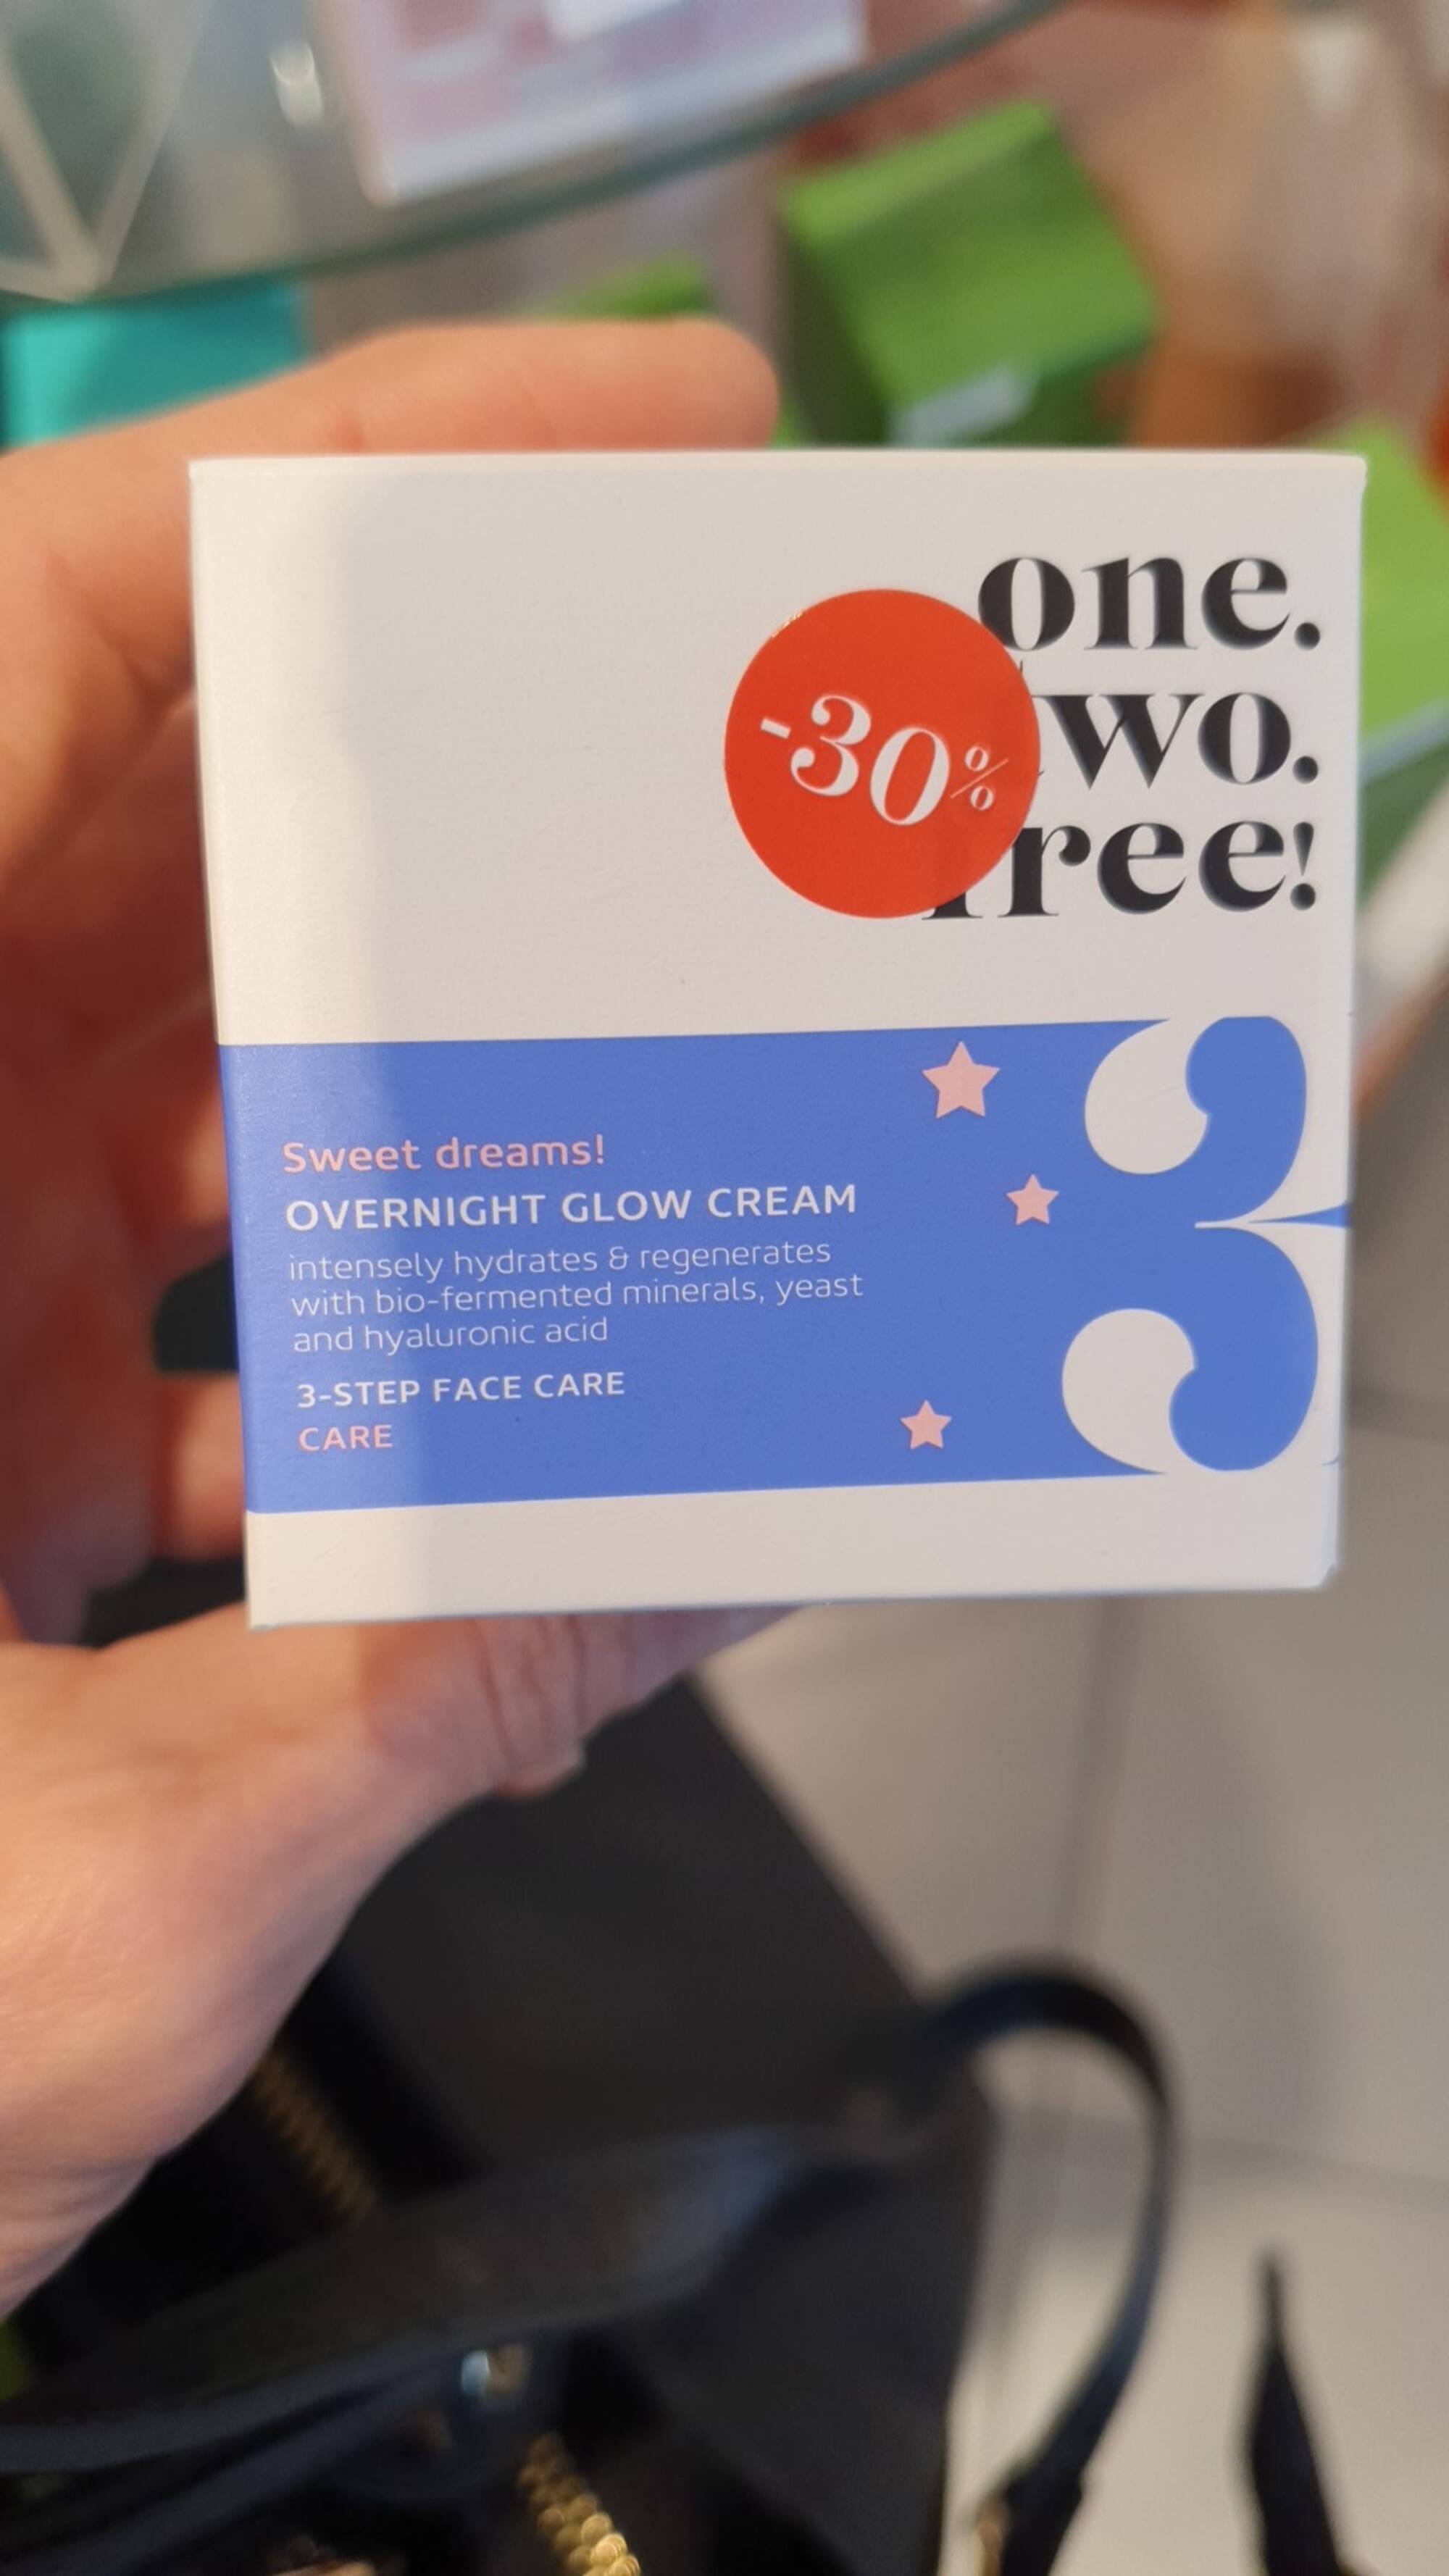 ONE.TWO.FREE! - Sweet dreams ! - Overnight glow cream